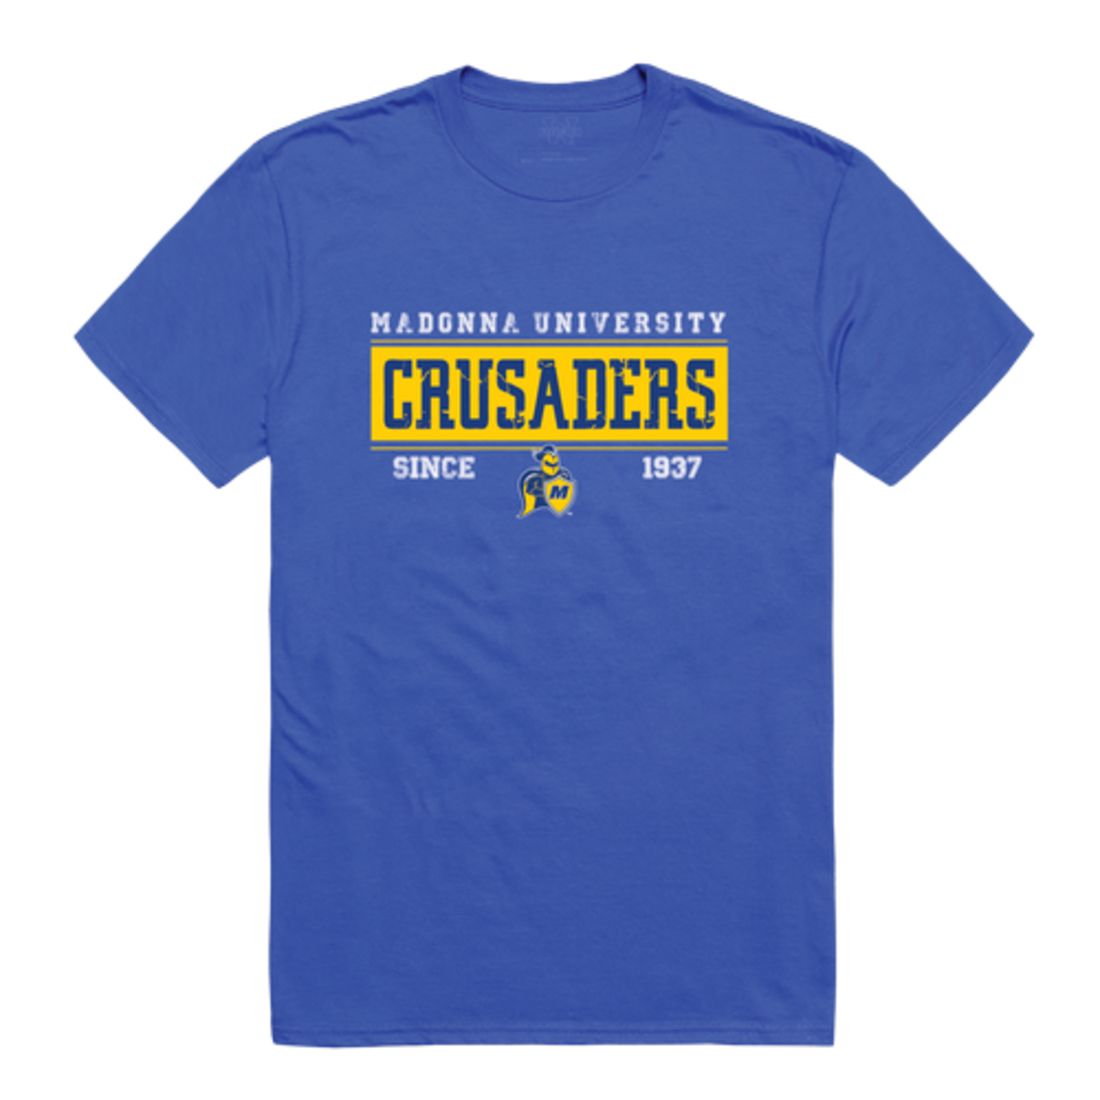 Madonna University Crusaders Established T-Shirt Tee